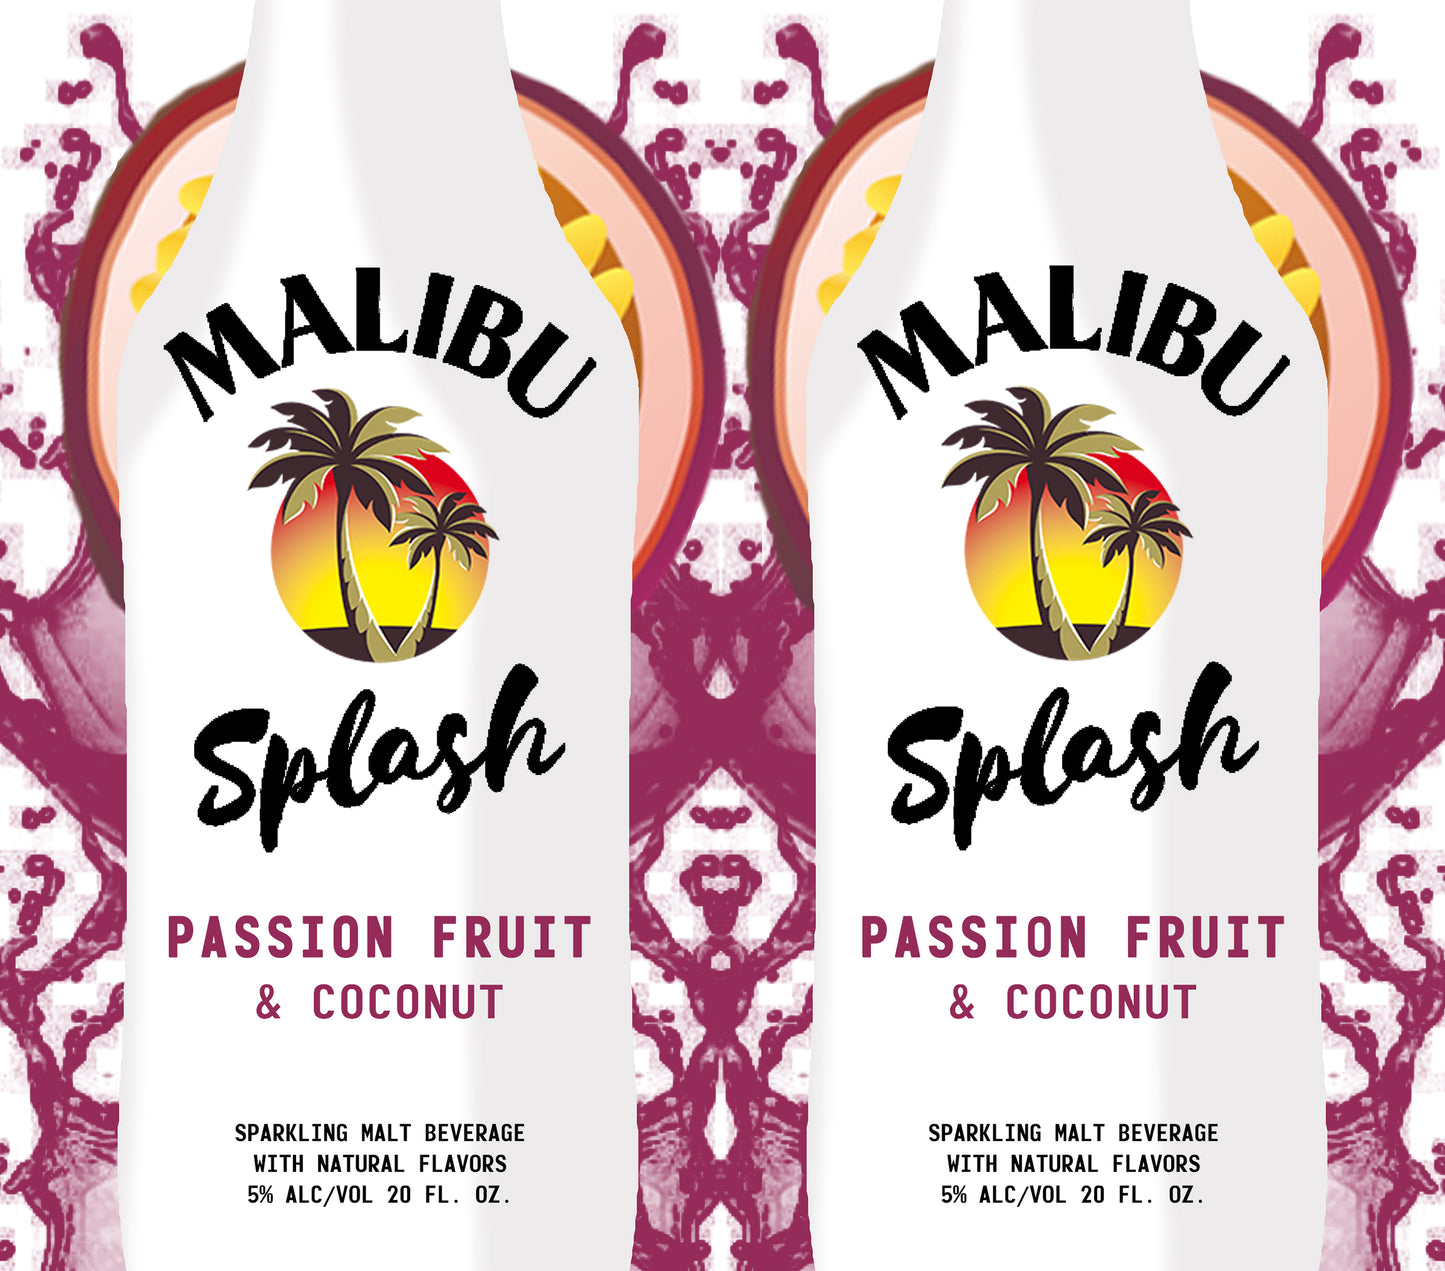 MALIBU SPLASH PASSION FRUIT